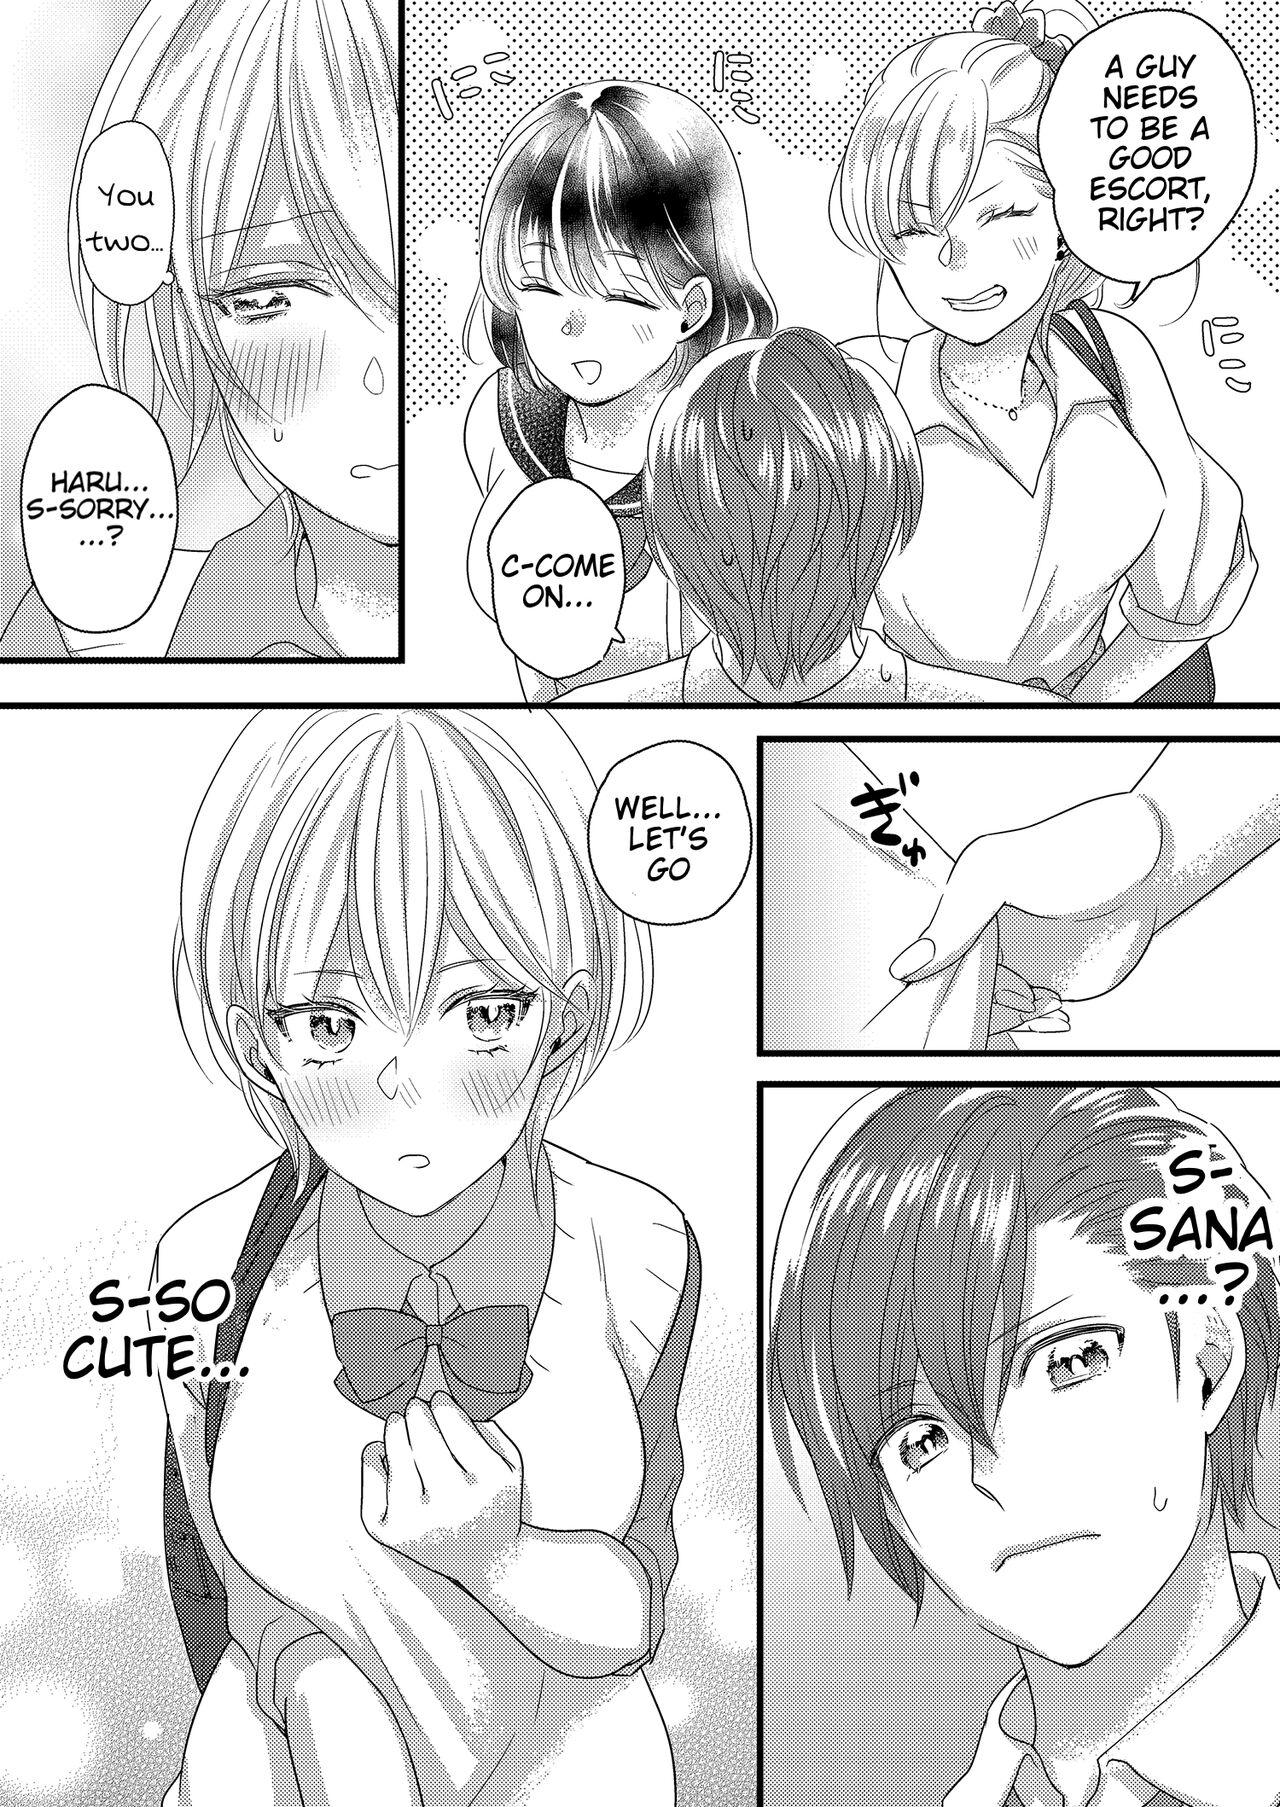 Spy Cam Haru and Sana ～Love Connected Through Cosplay～ - Original Rola - Page 2